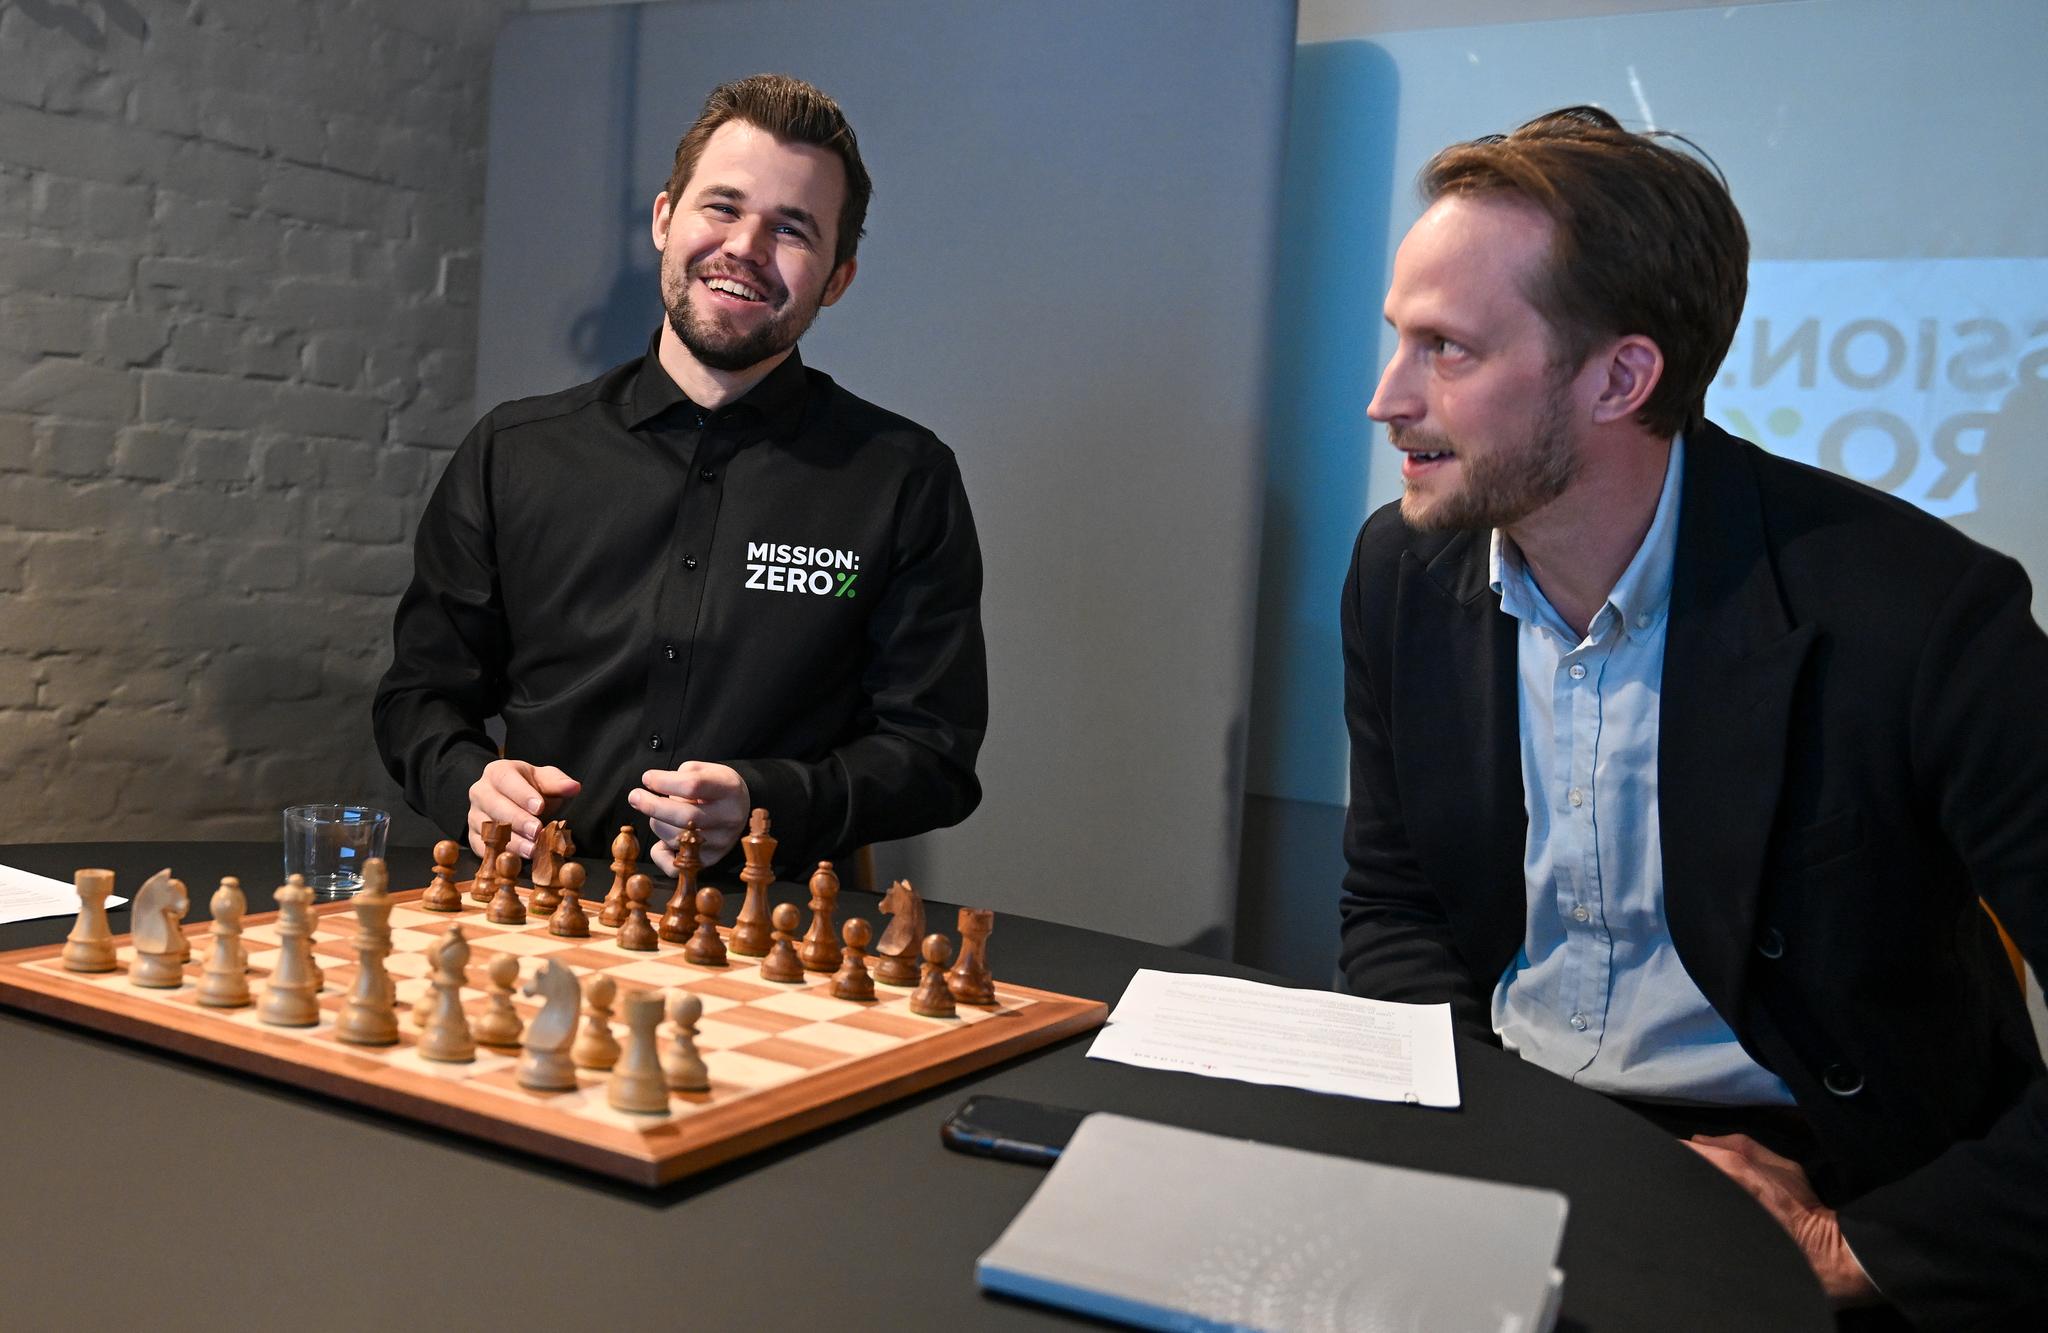 NY AVTALE: Magnus Carlsen sammen med CCO i Unibet Nils Andén i Oslo torsdag.